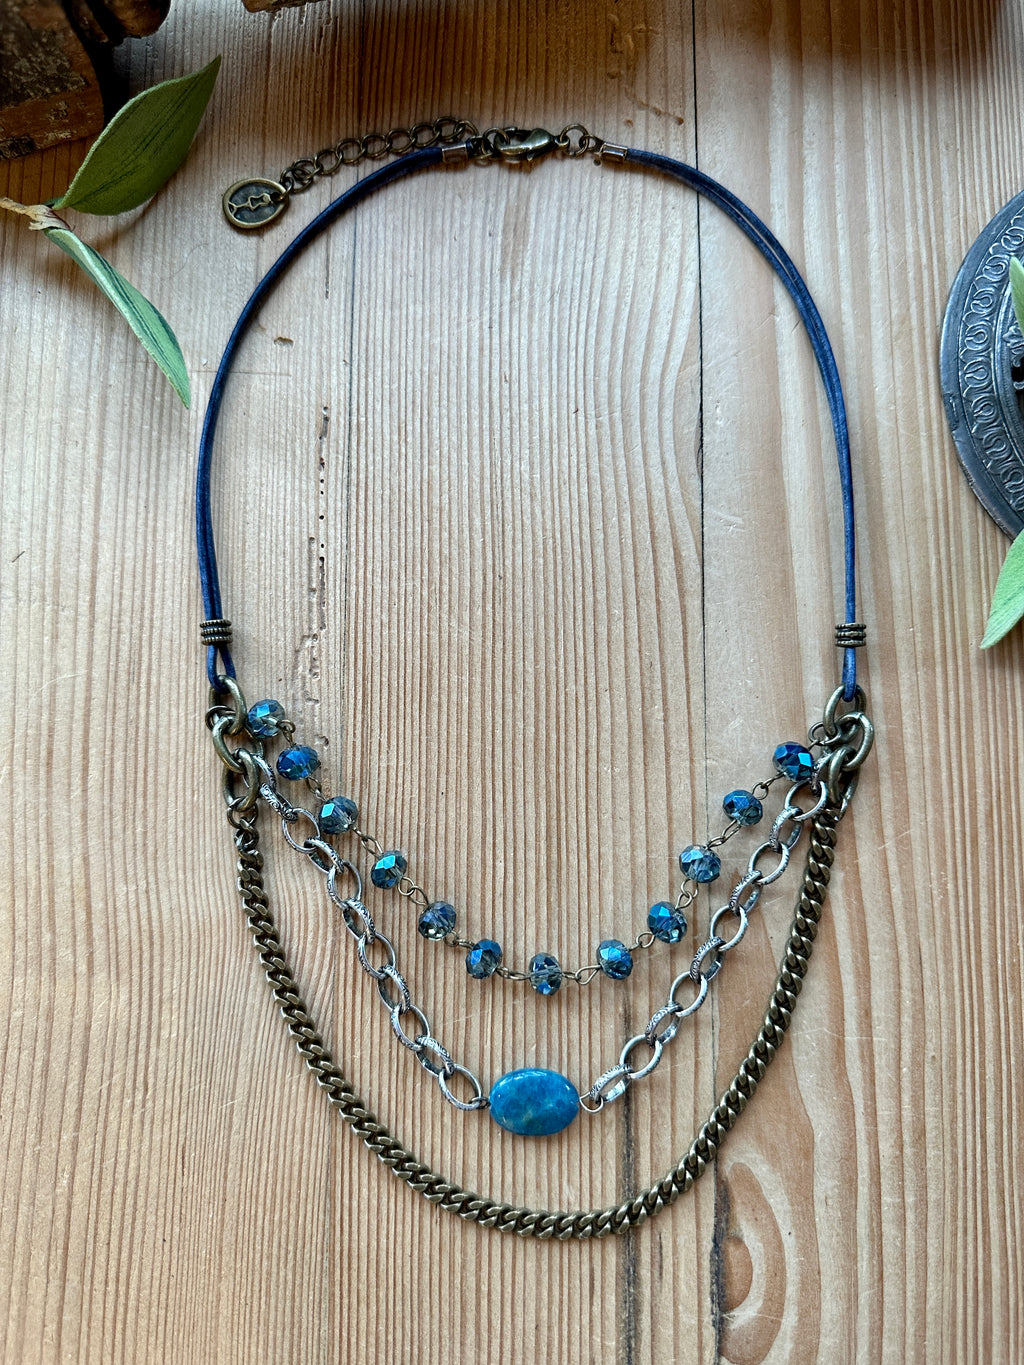 Indigo Lace Short Triple Necklace